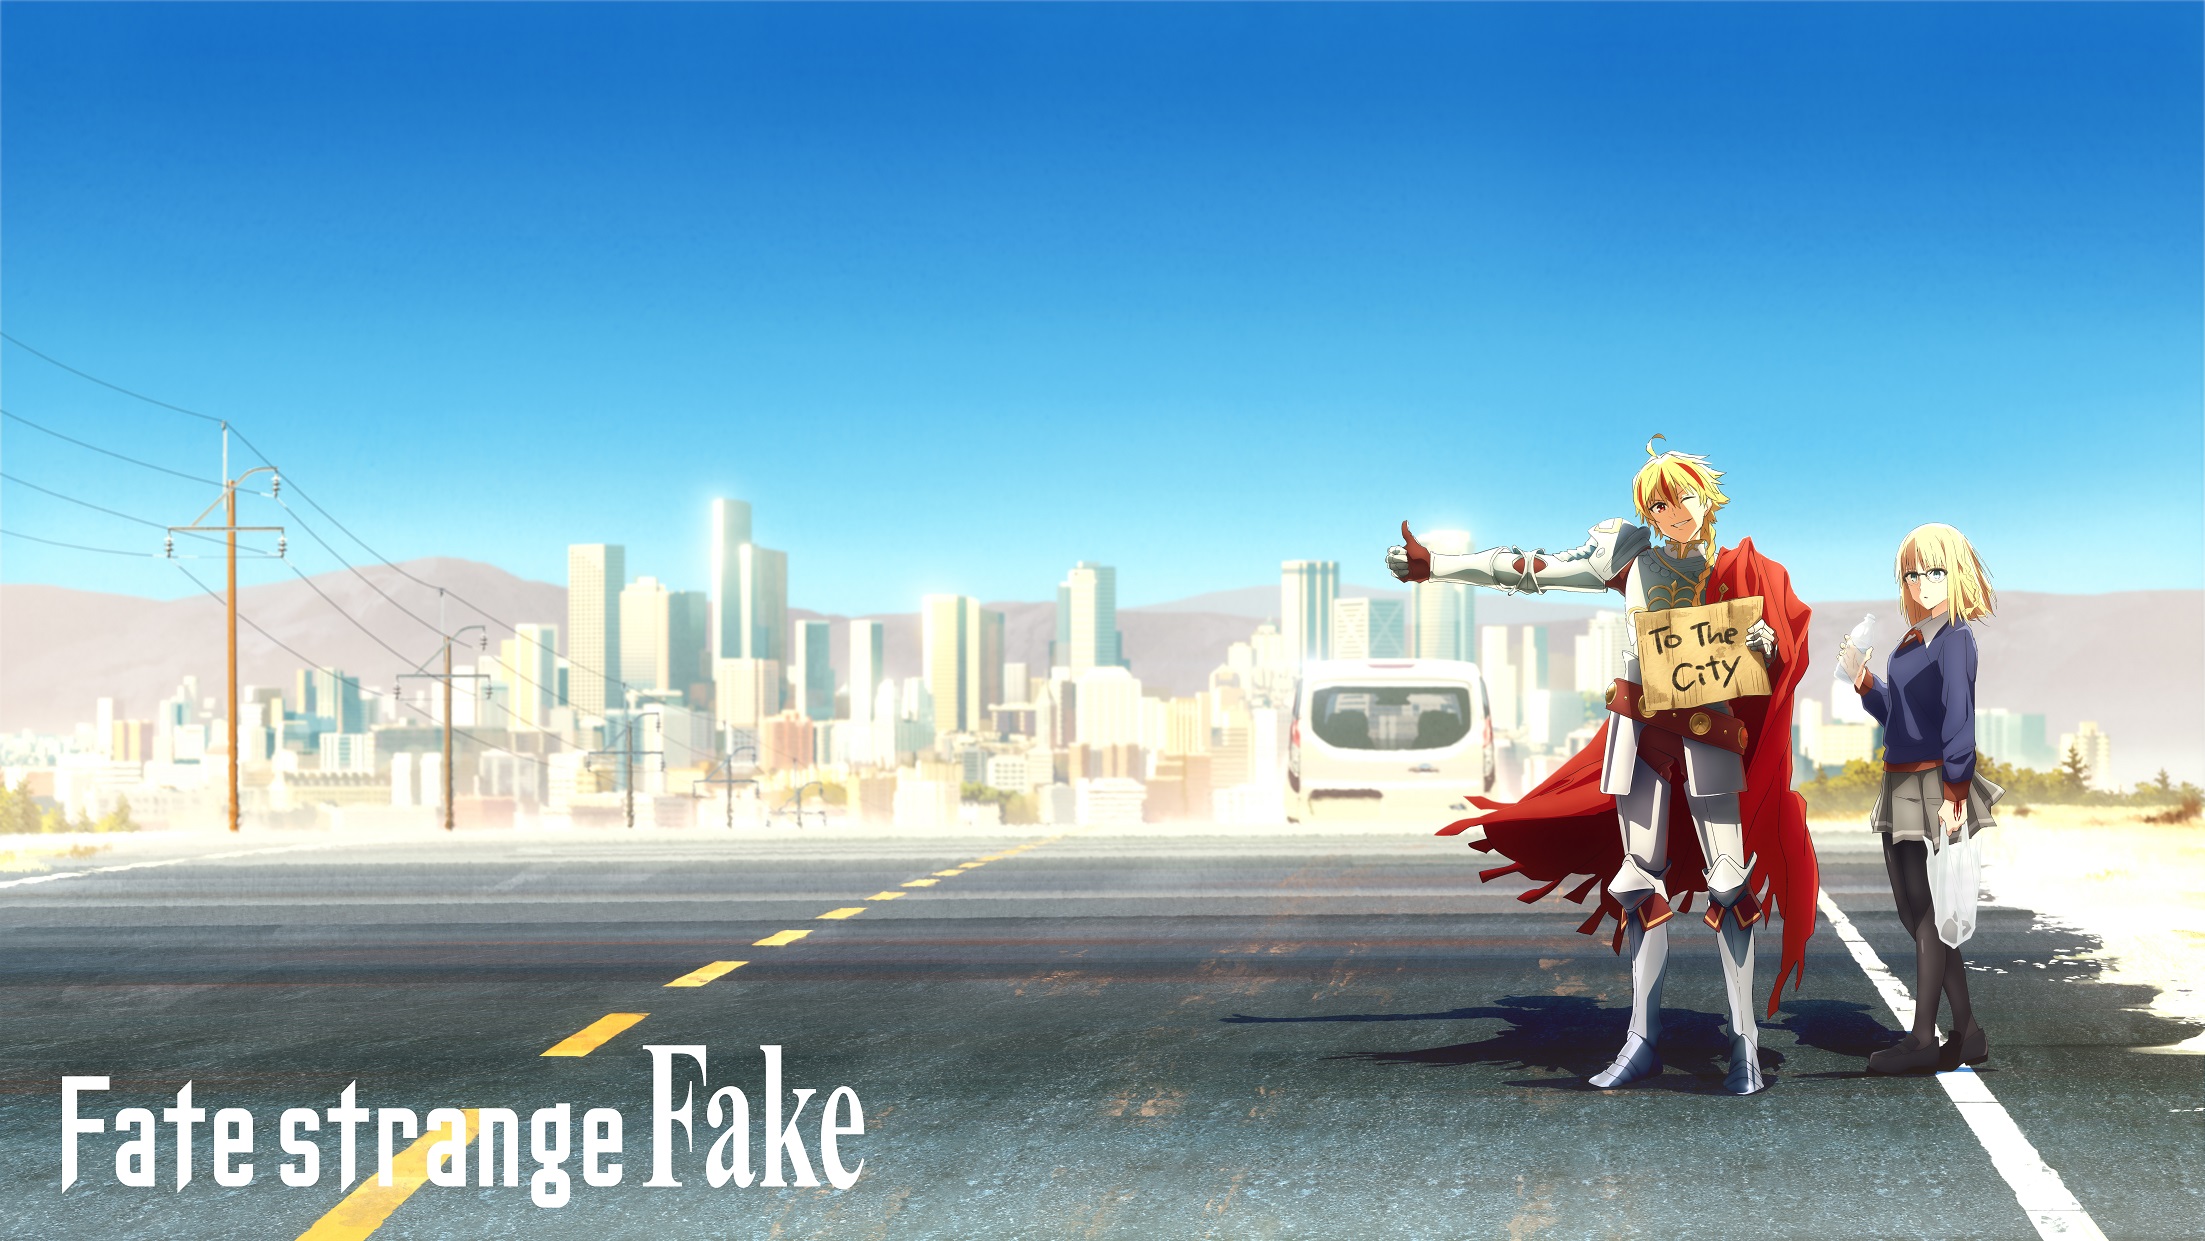 Fake Romance Anime | Anime-Planet